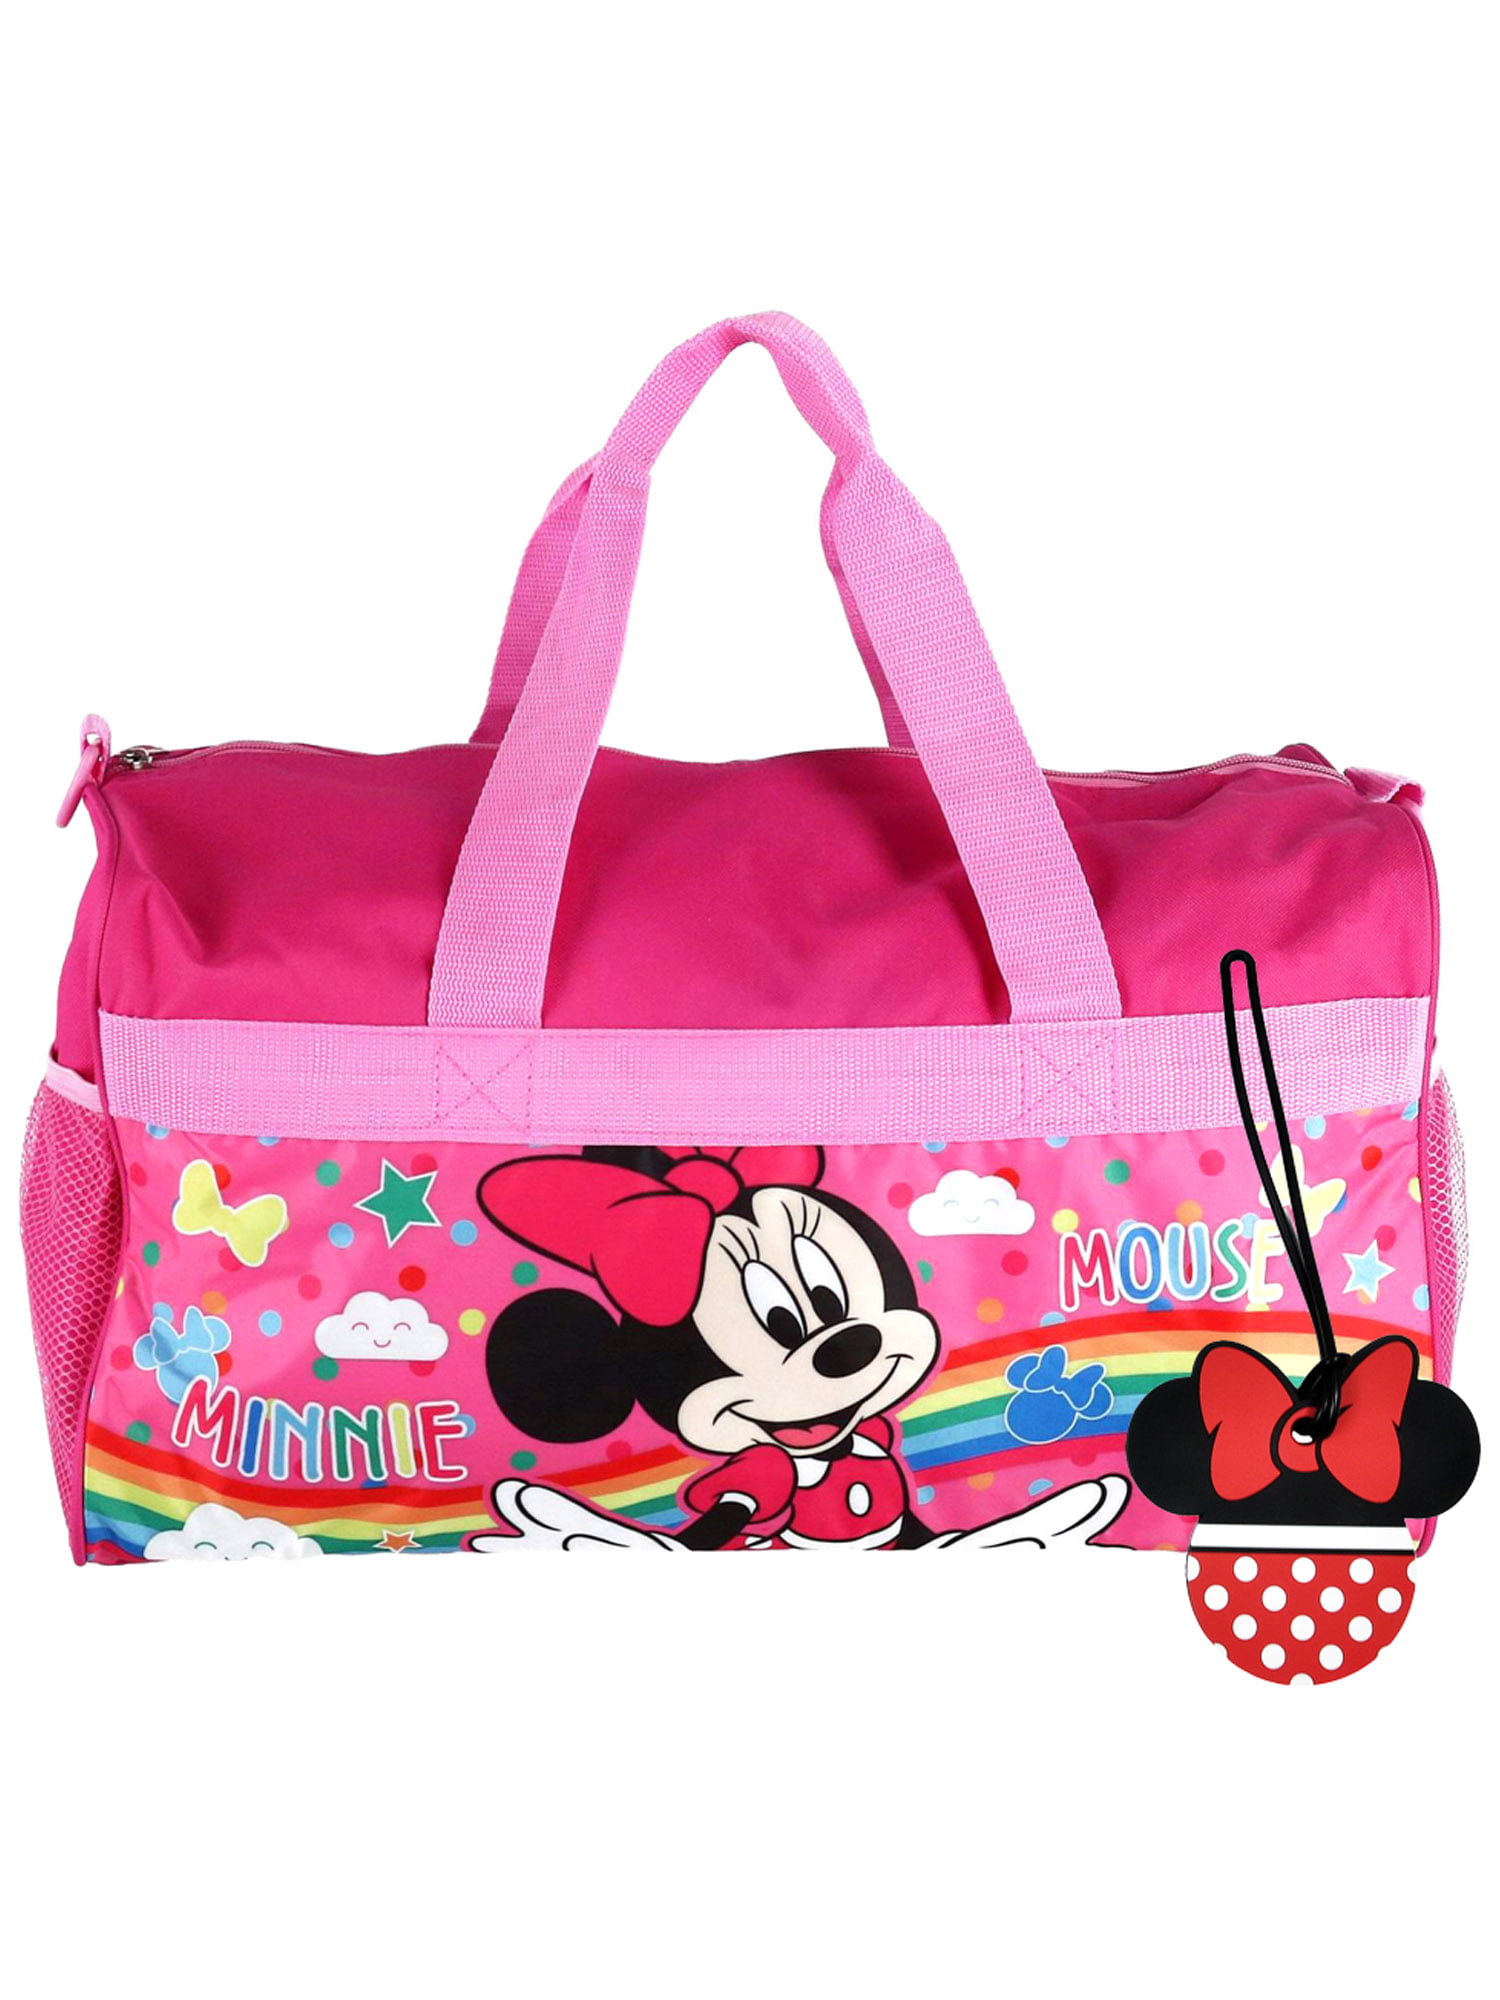 Disney Mickey Mouse Sports Holdall Bag Travel School Overnight PE Bag 28